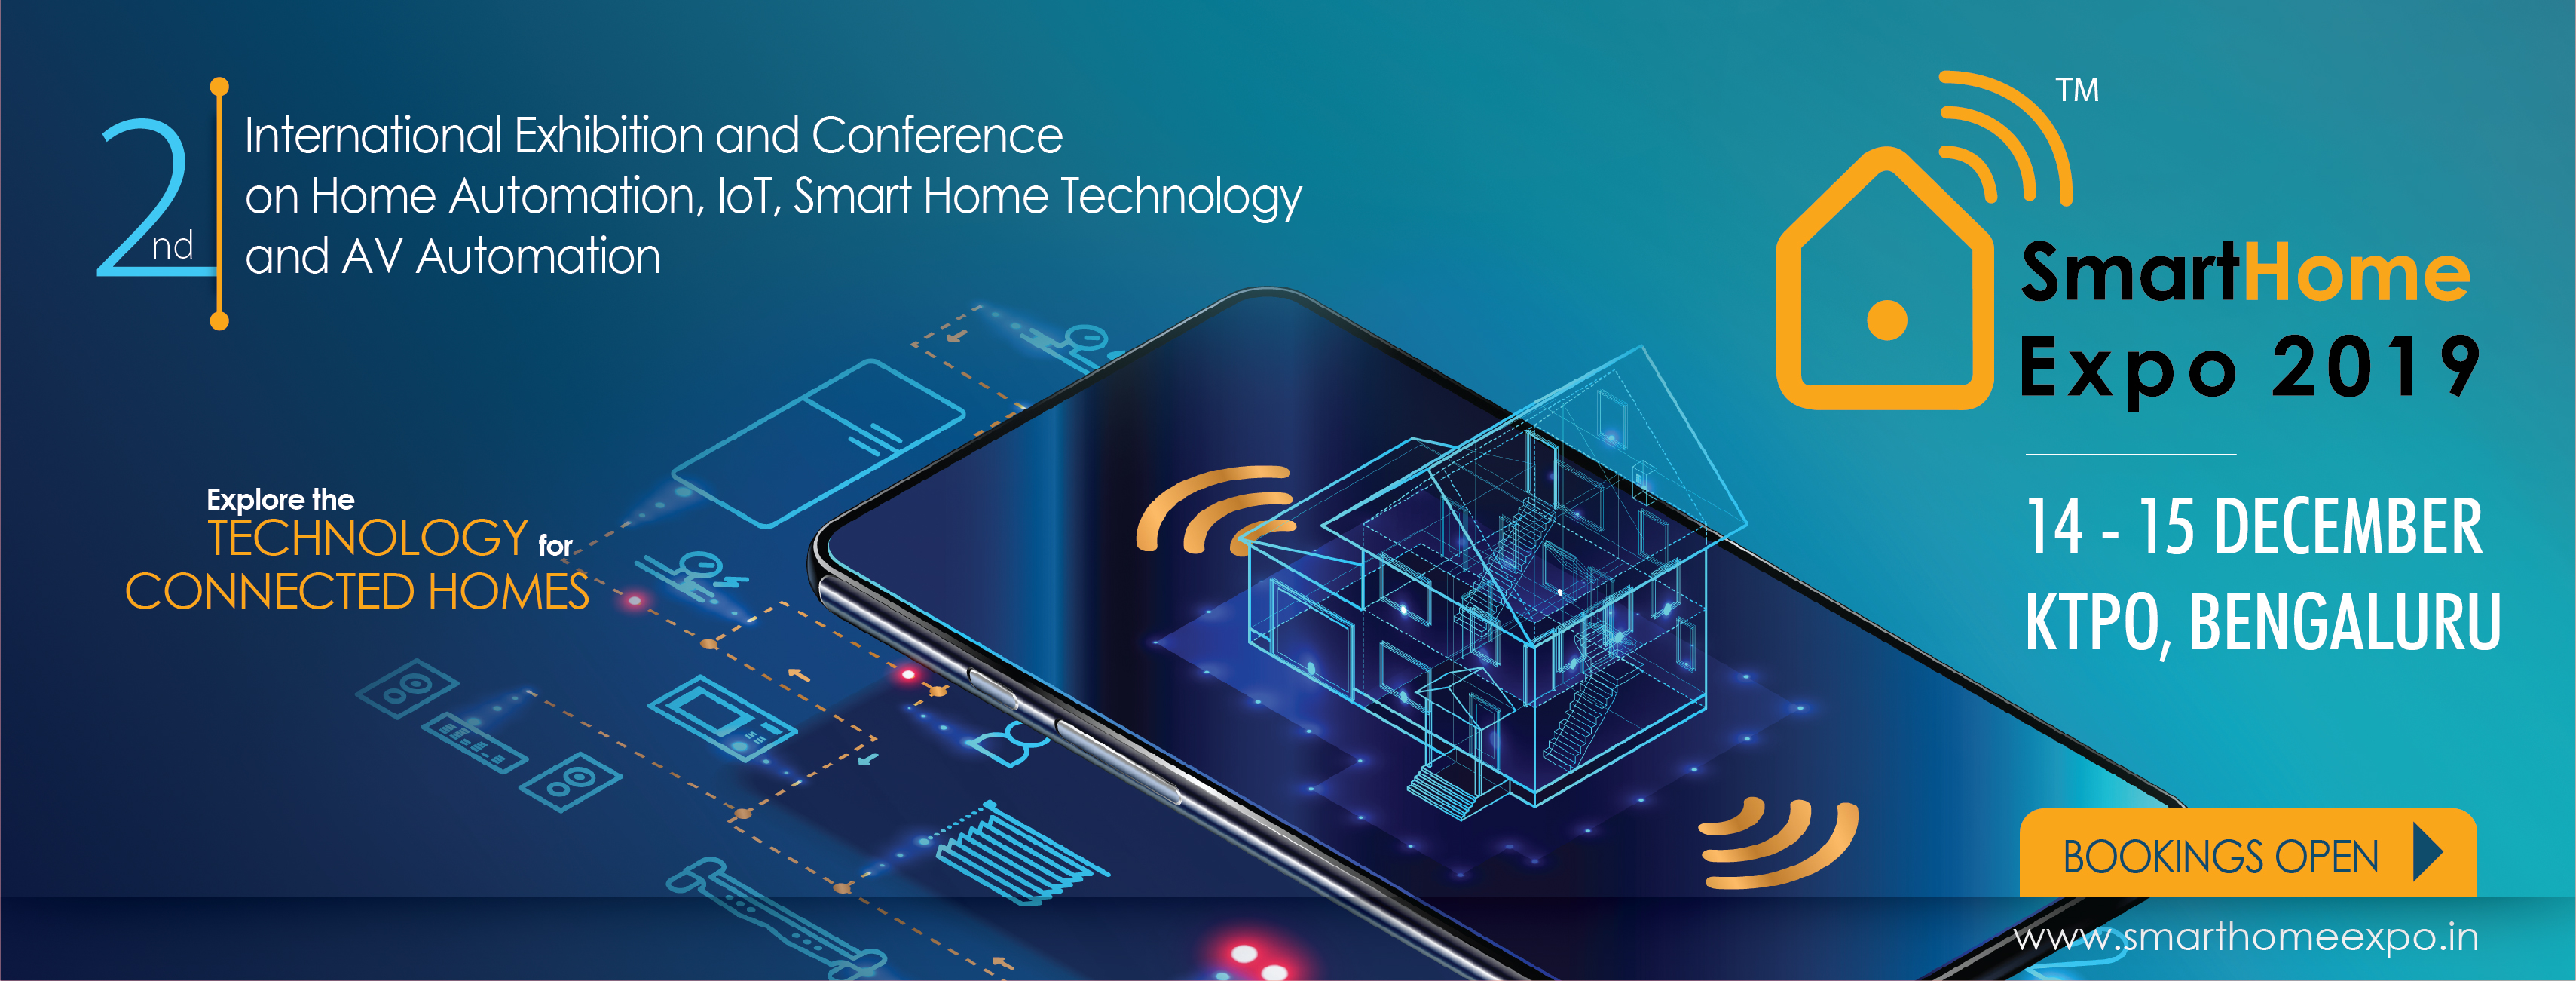 Smart Home Expo - 2nd Edition, Bangalore, Karnataka, India